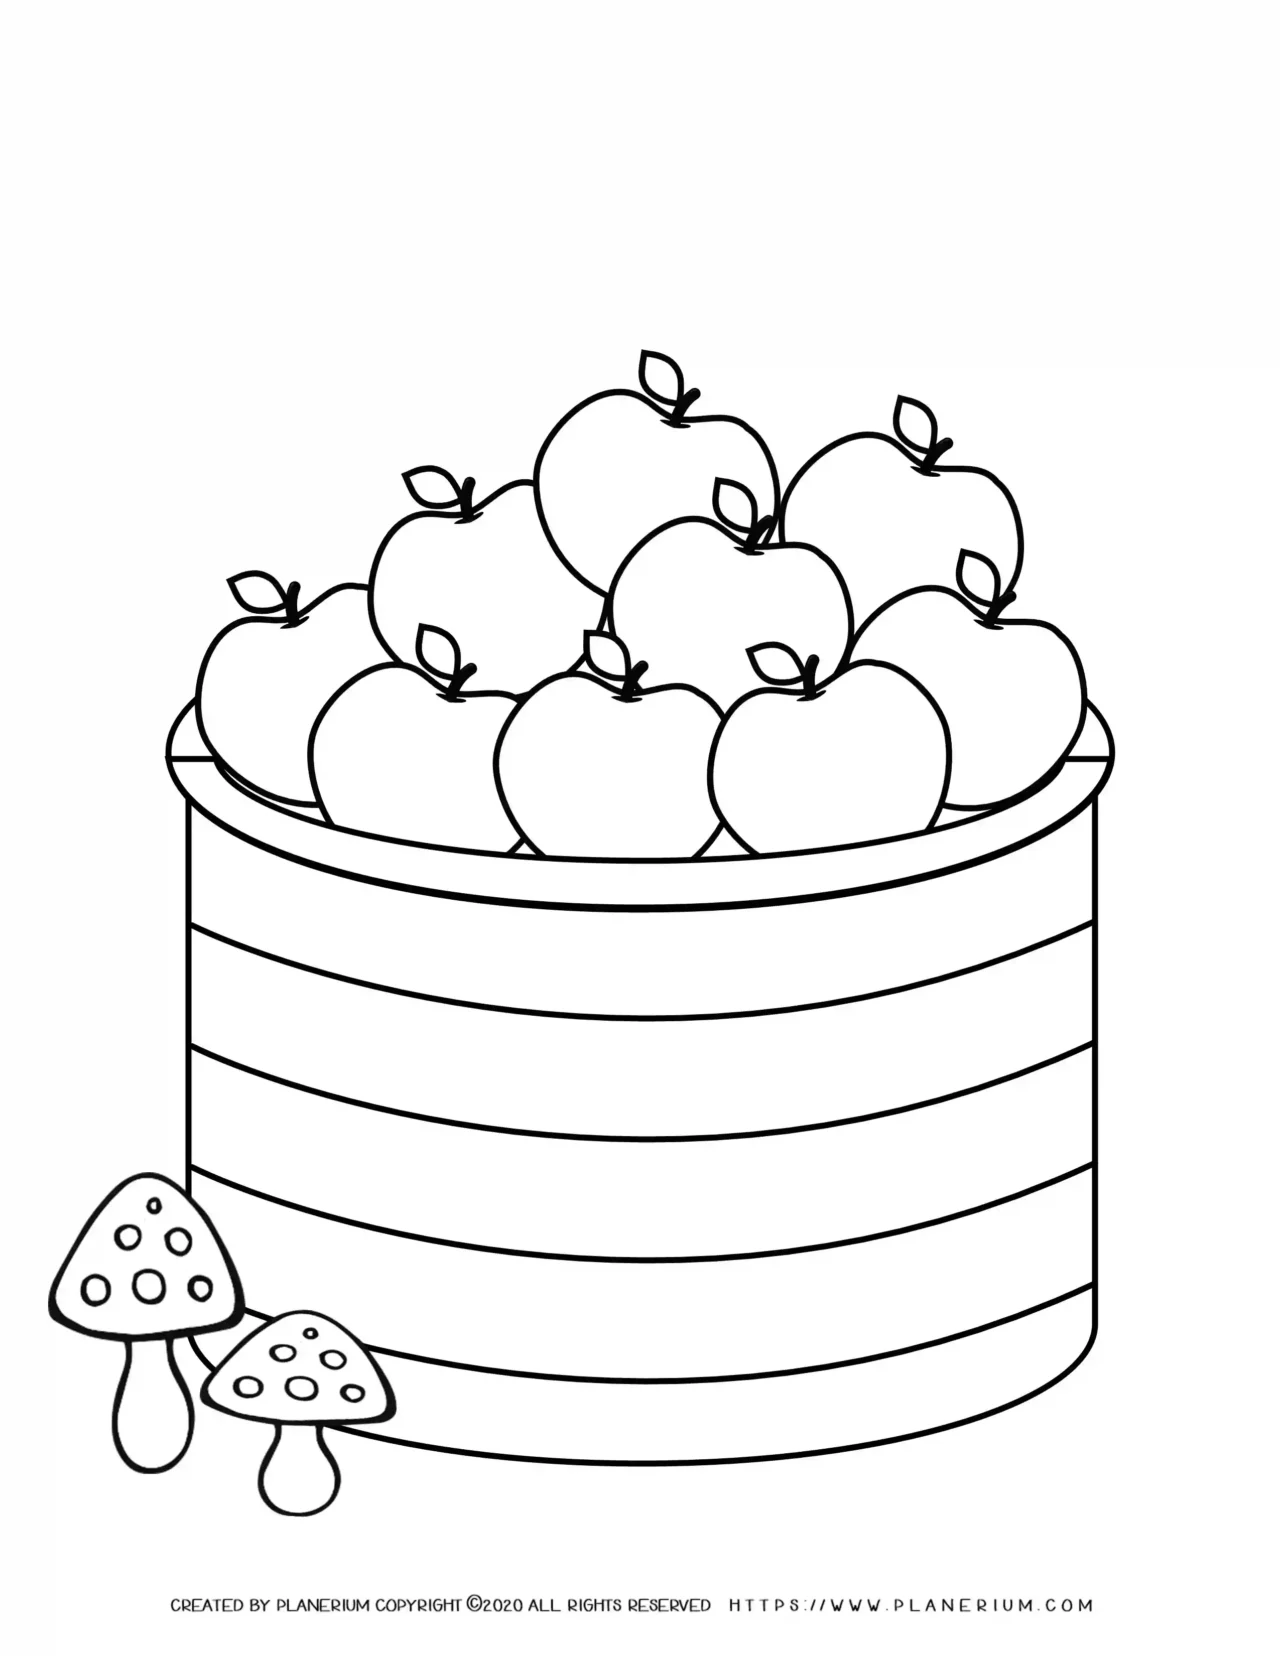 Fall Season - Coloring Page - Basket of Apples